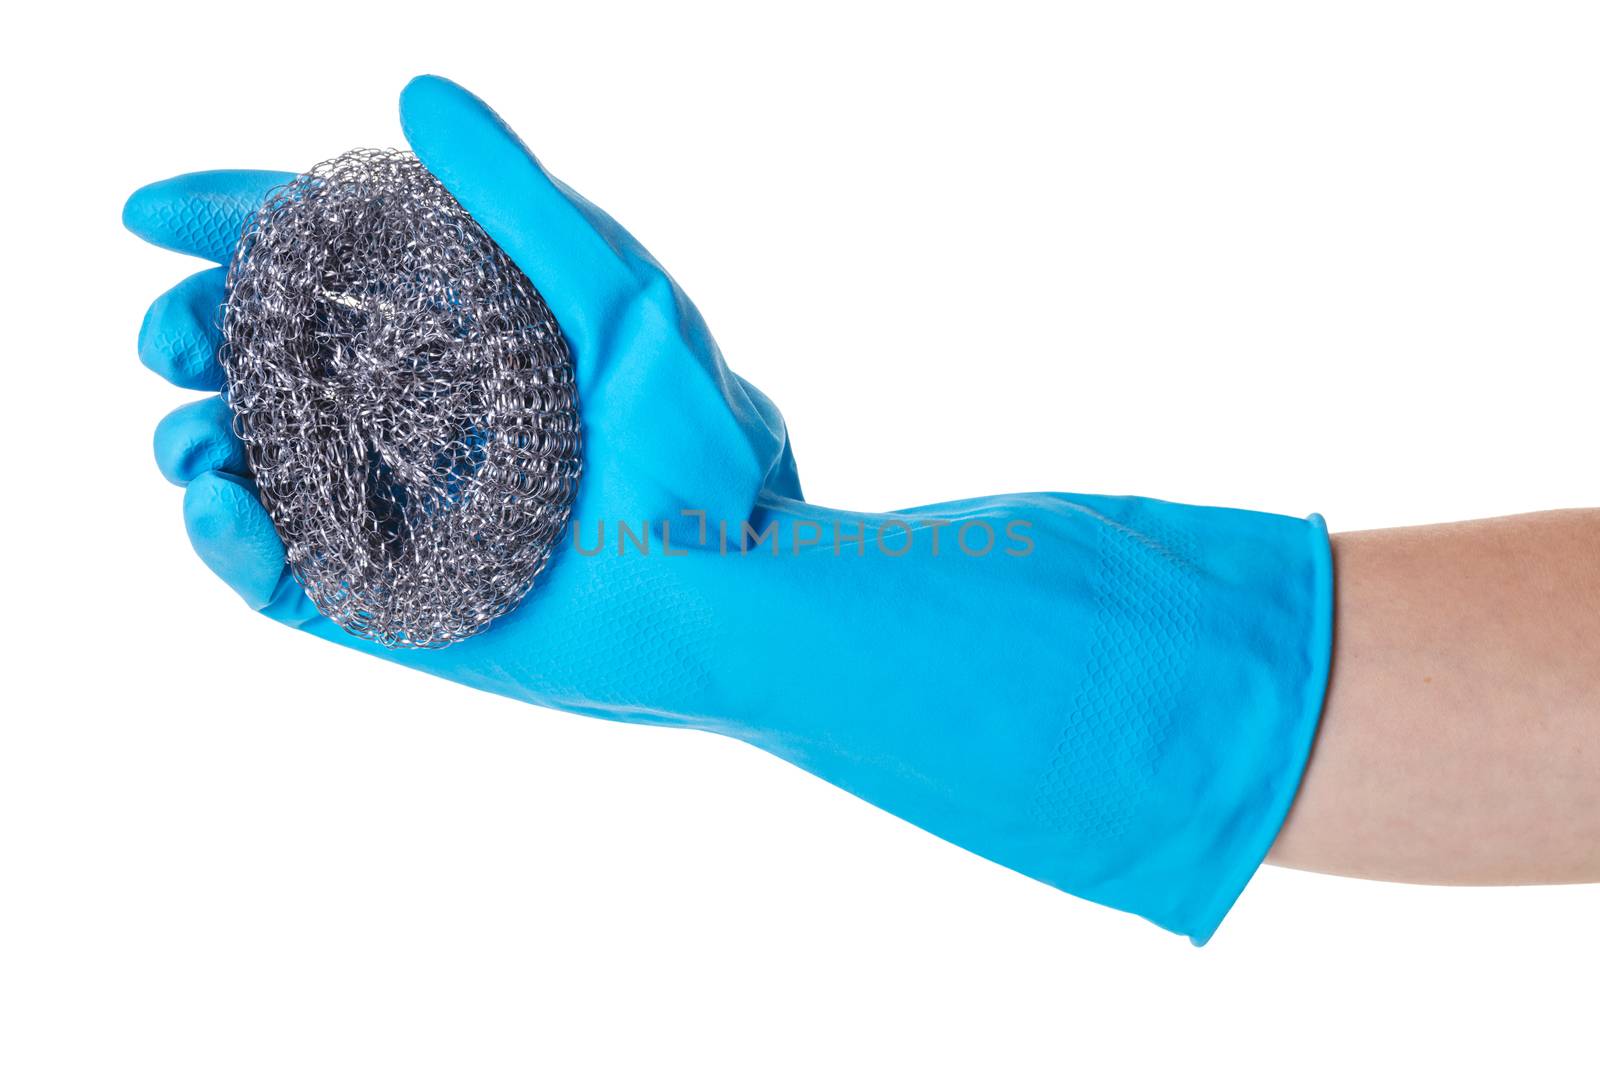 metal sponge for utensils in a female hand by MegaArt